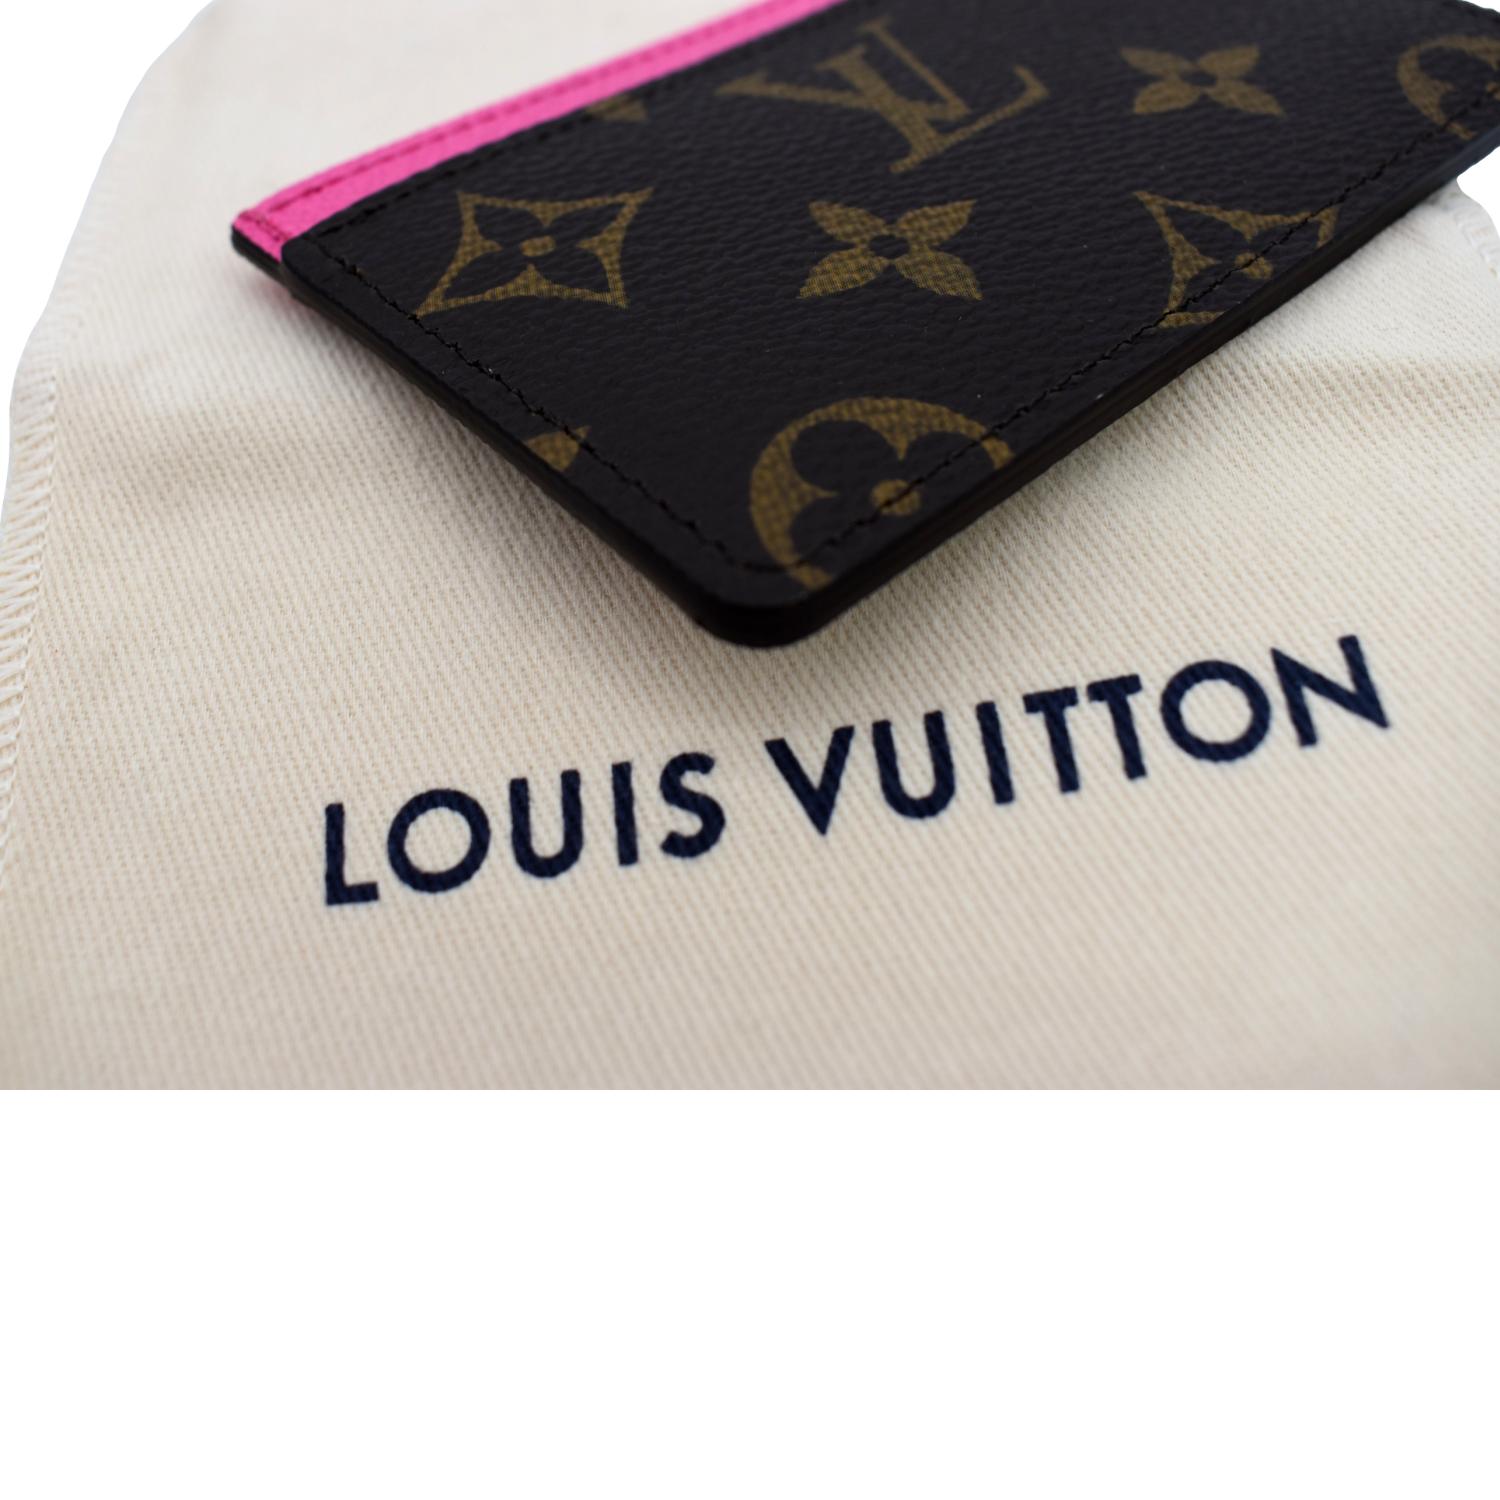 Louis Vuitton LV Folder Icon By J Farhat by JFarhat on DeviantArt